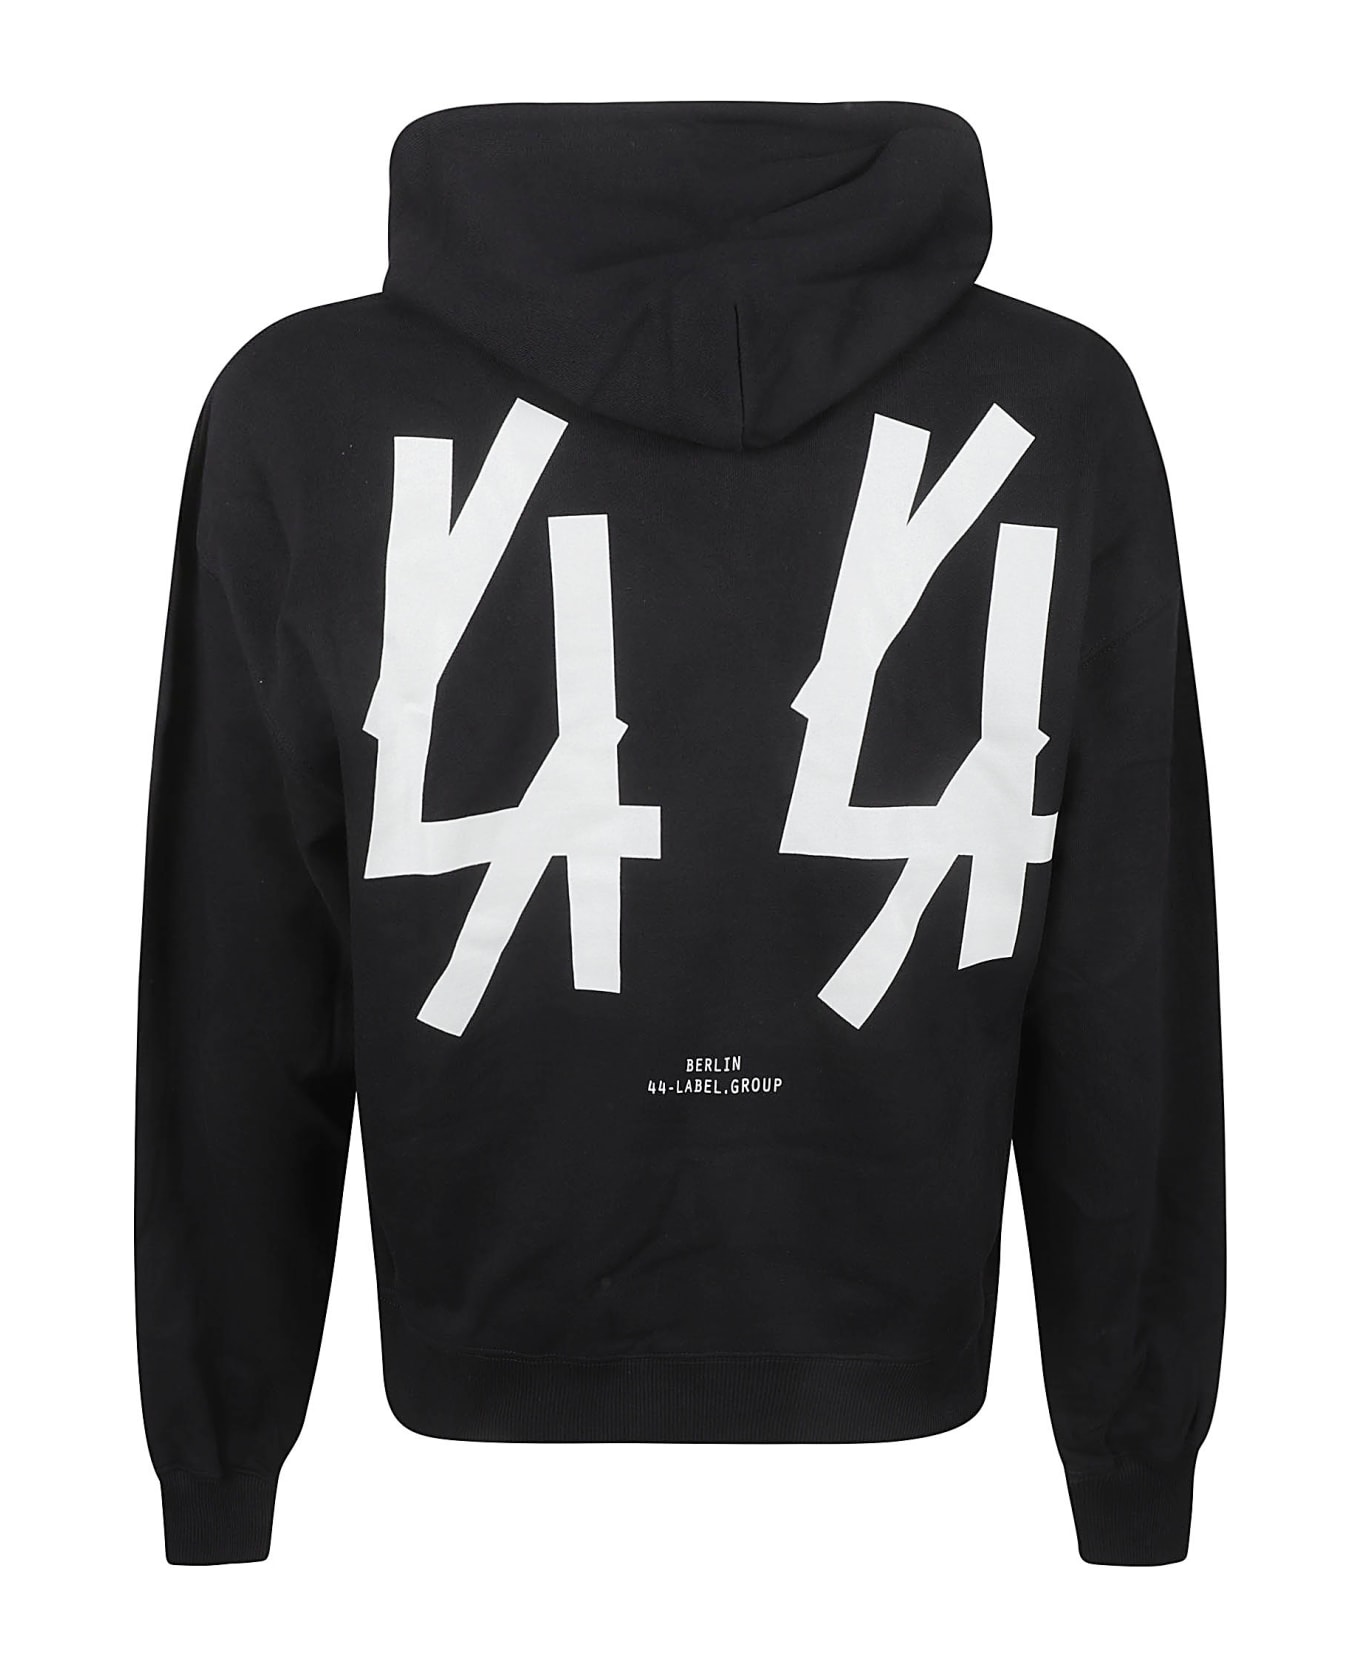 44 Label Group Tonal Logo Hoodie - Black フリース